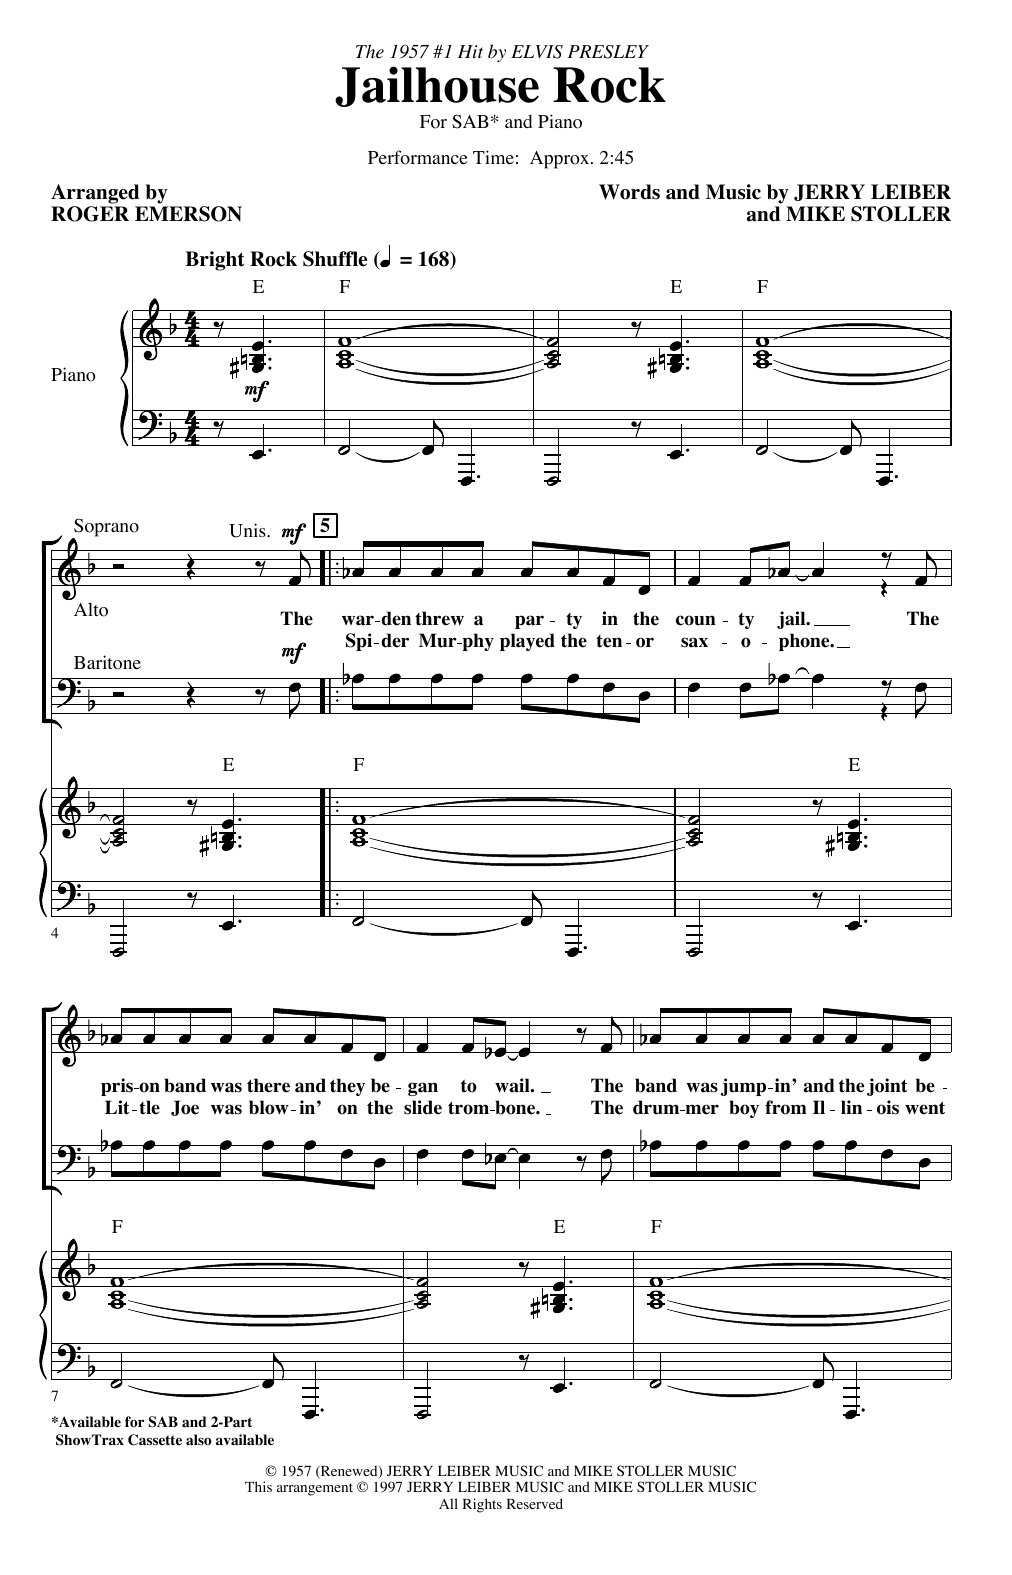 Elvis Presley Jailhouse Rock (arr. Roger Emerson) Sheet Music Notes & Chords for SAB Choir - Download or Print PDF